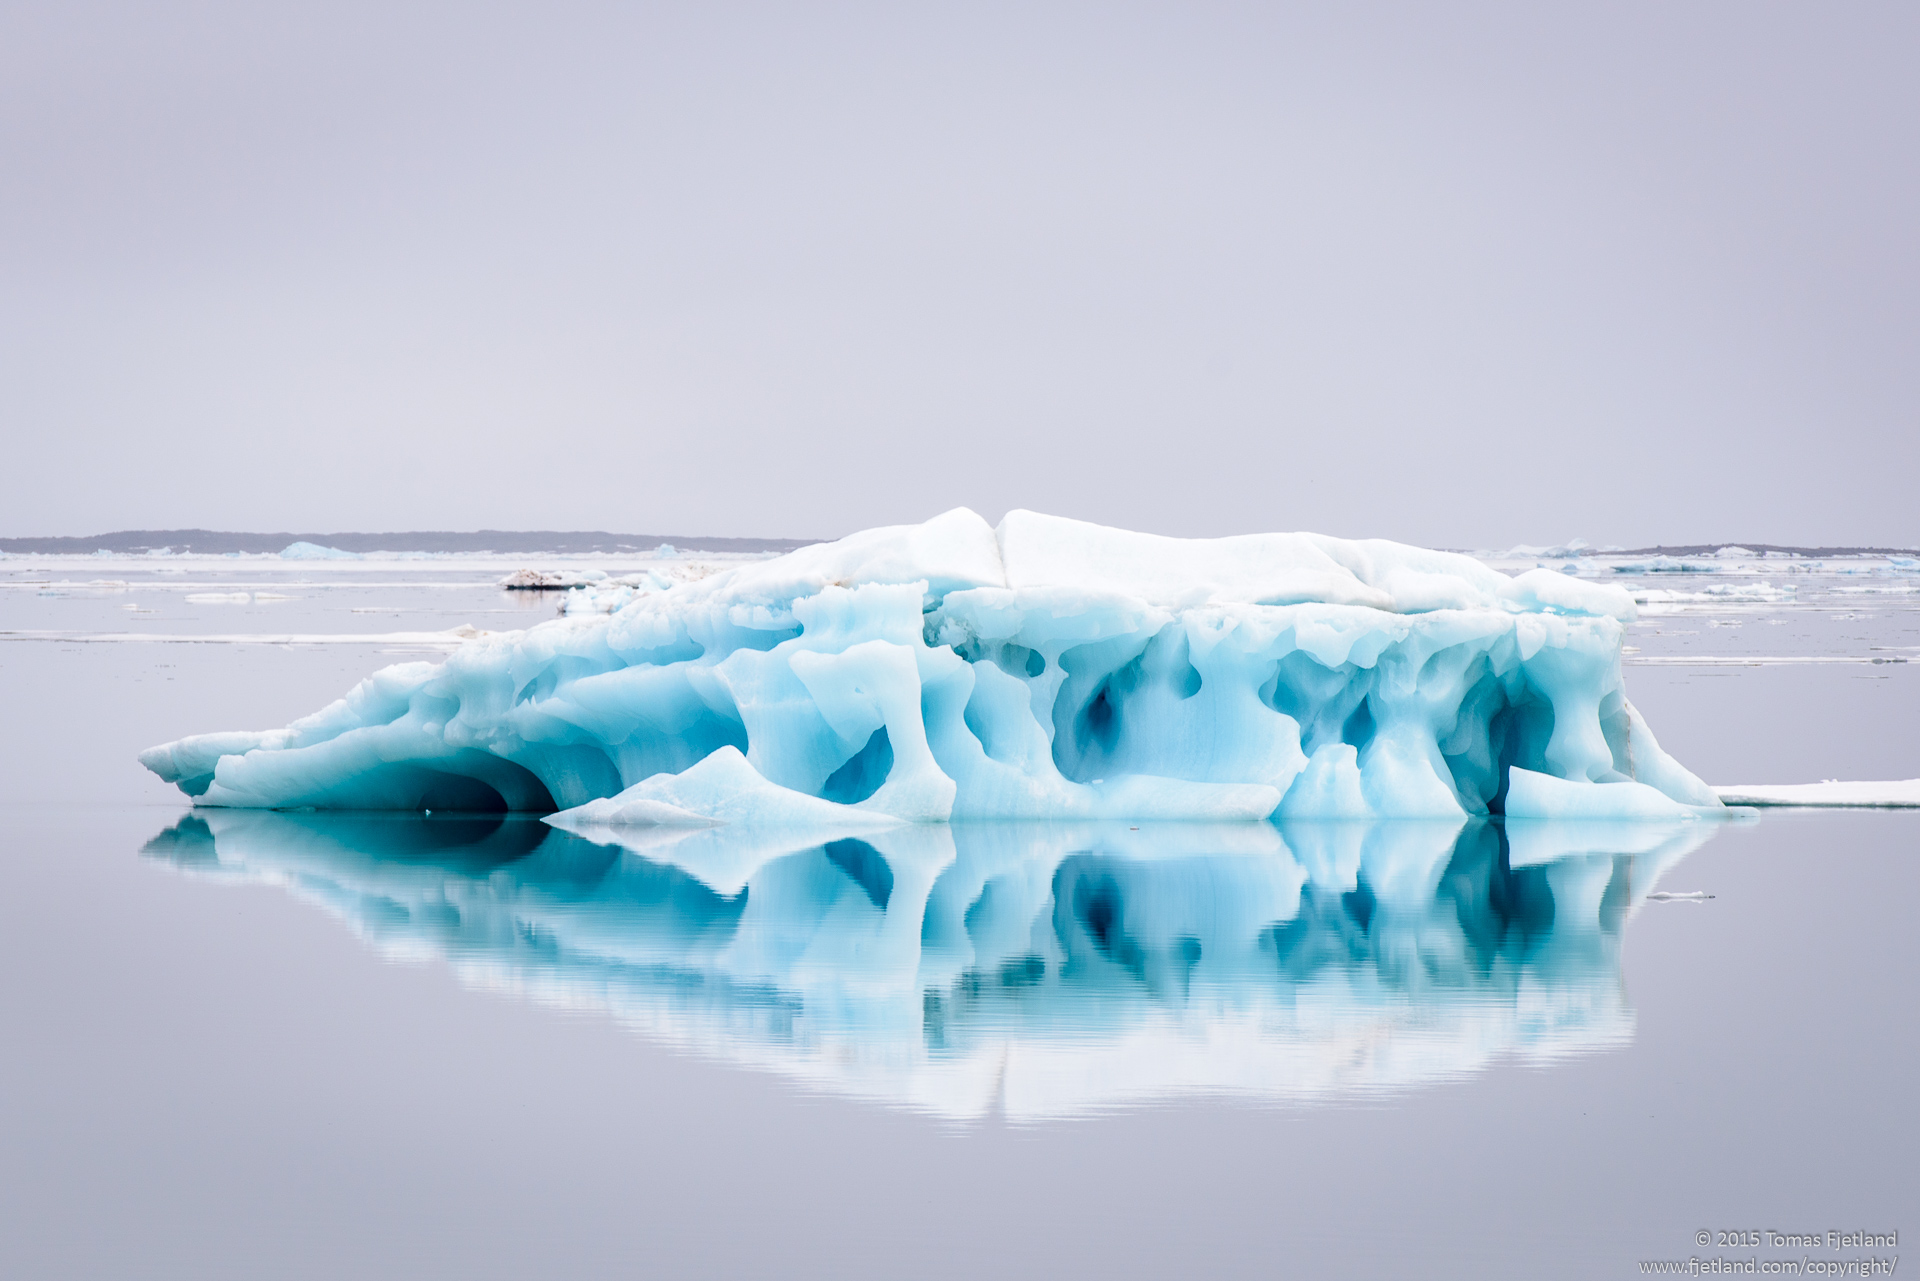 Iceberg sculpture